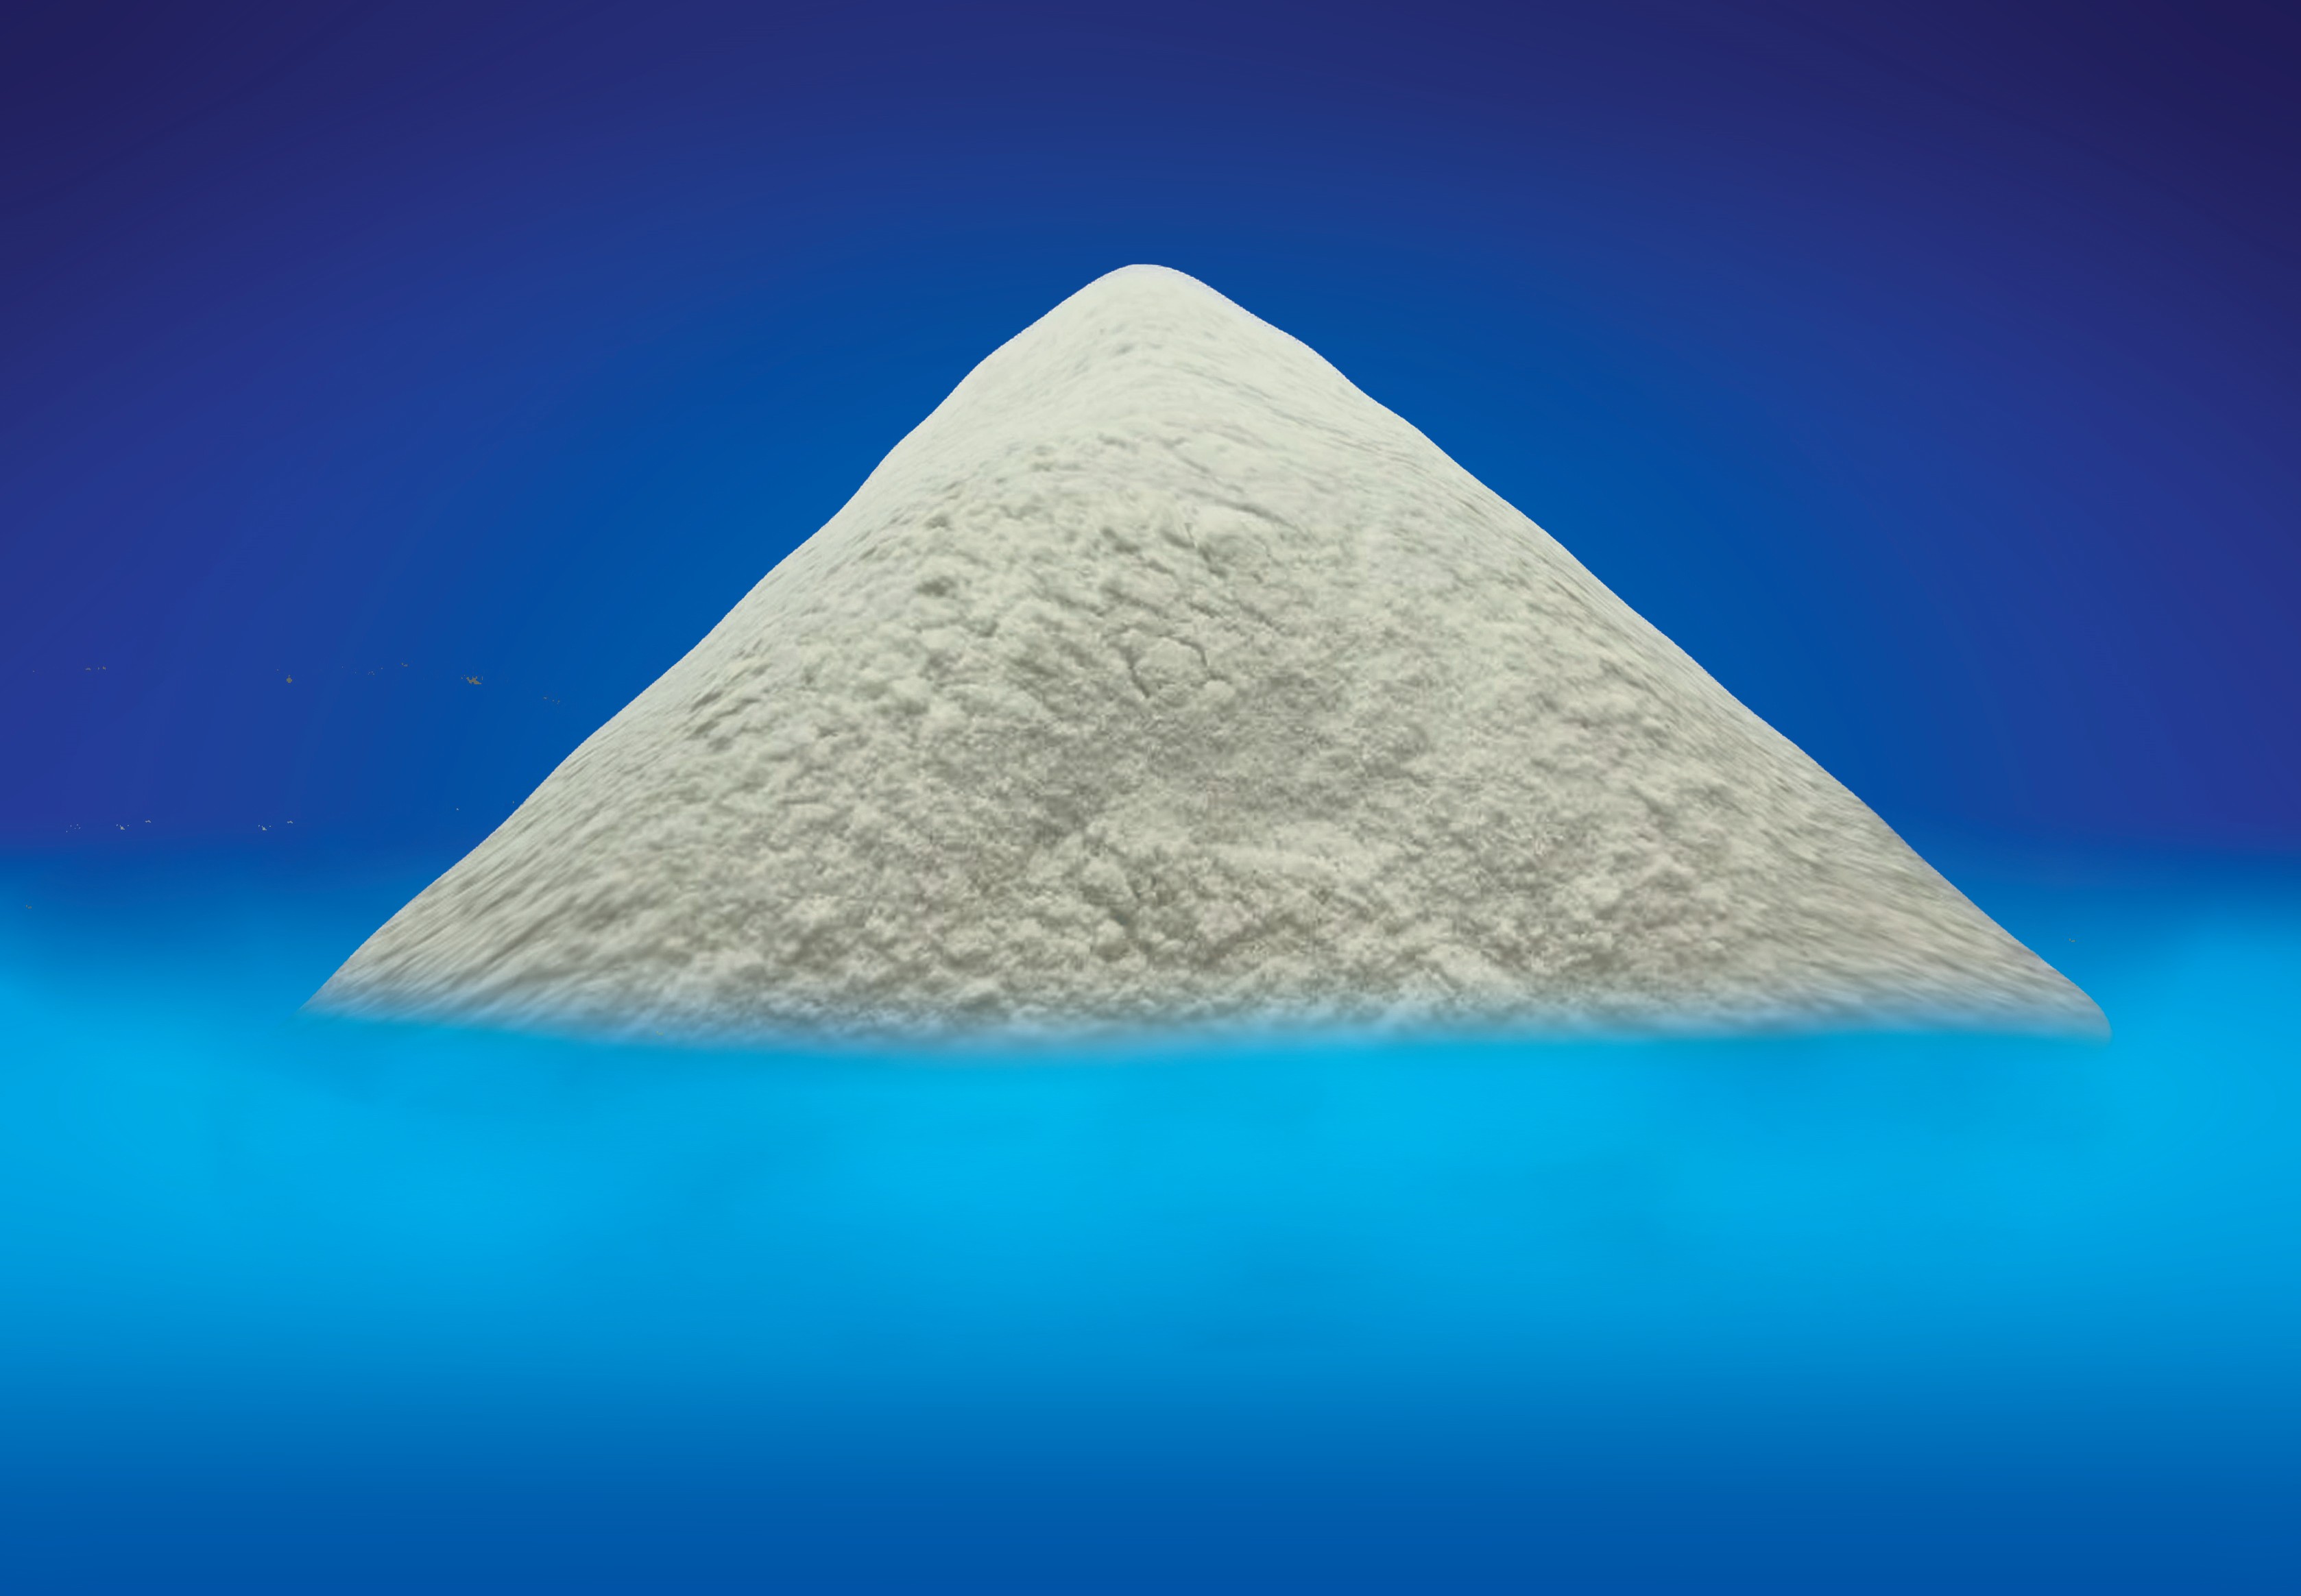 L-selenomethionine Gray White Powder Animal Feed Additive